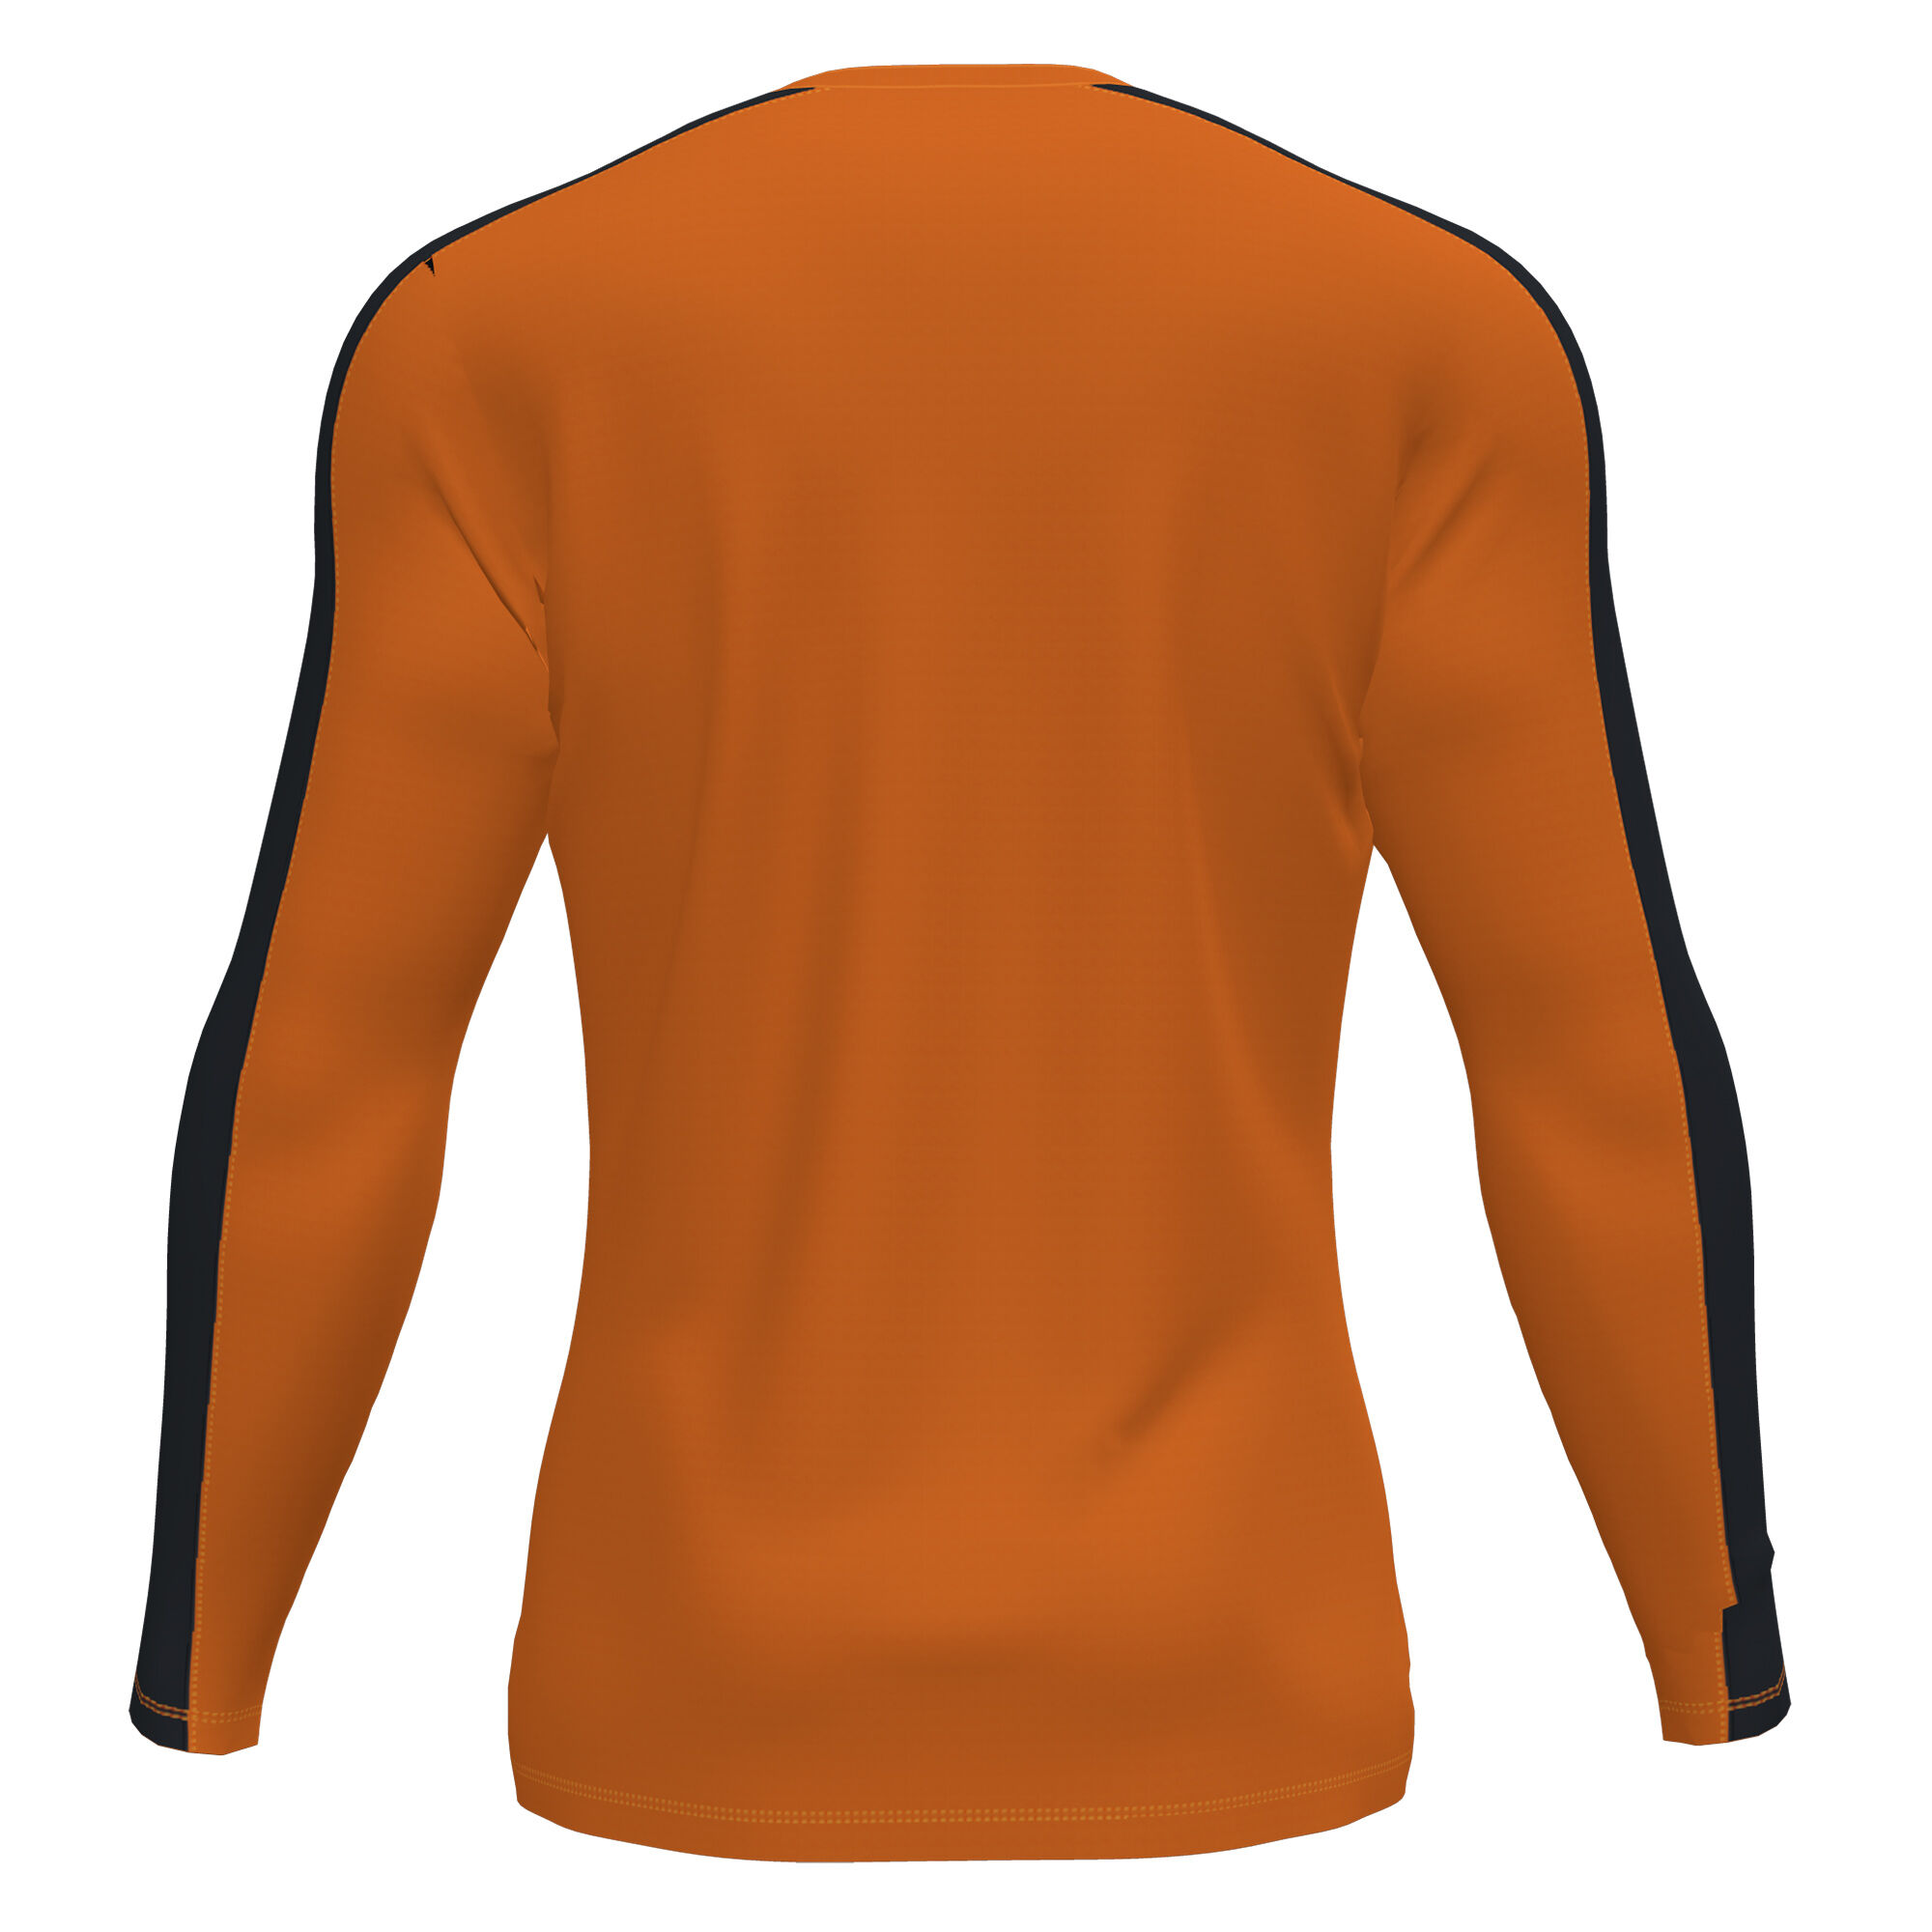 Camiseta manga larga hombre Academy III naranja negro